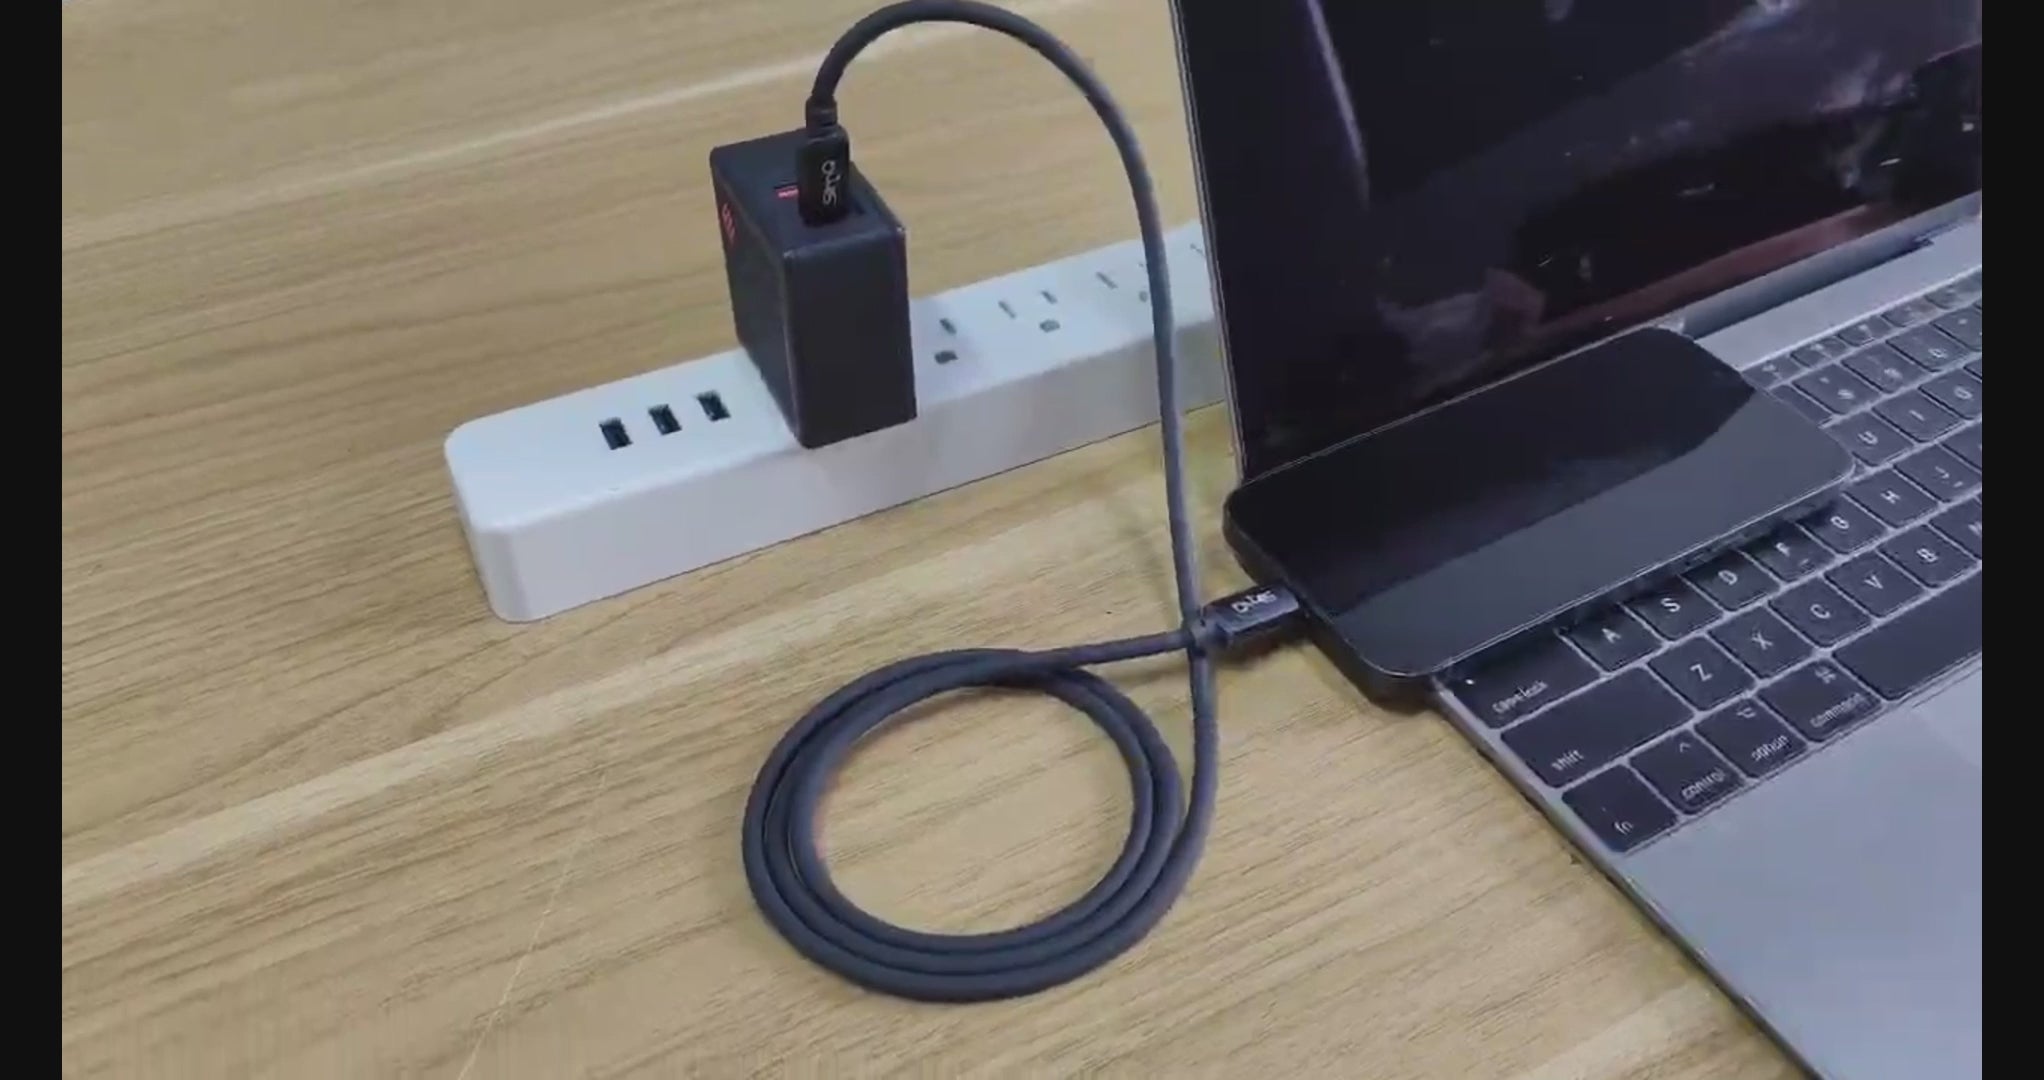 Cable USB-C del relámpago | el 1M